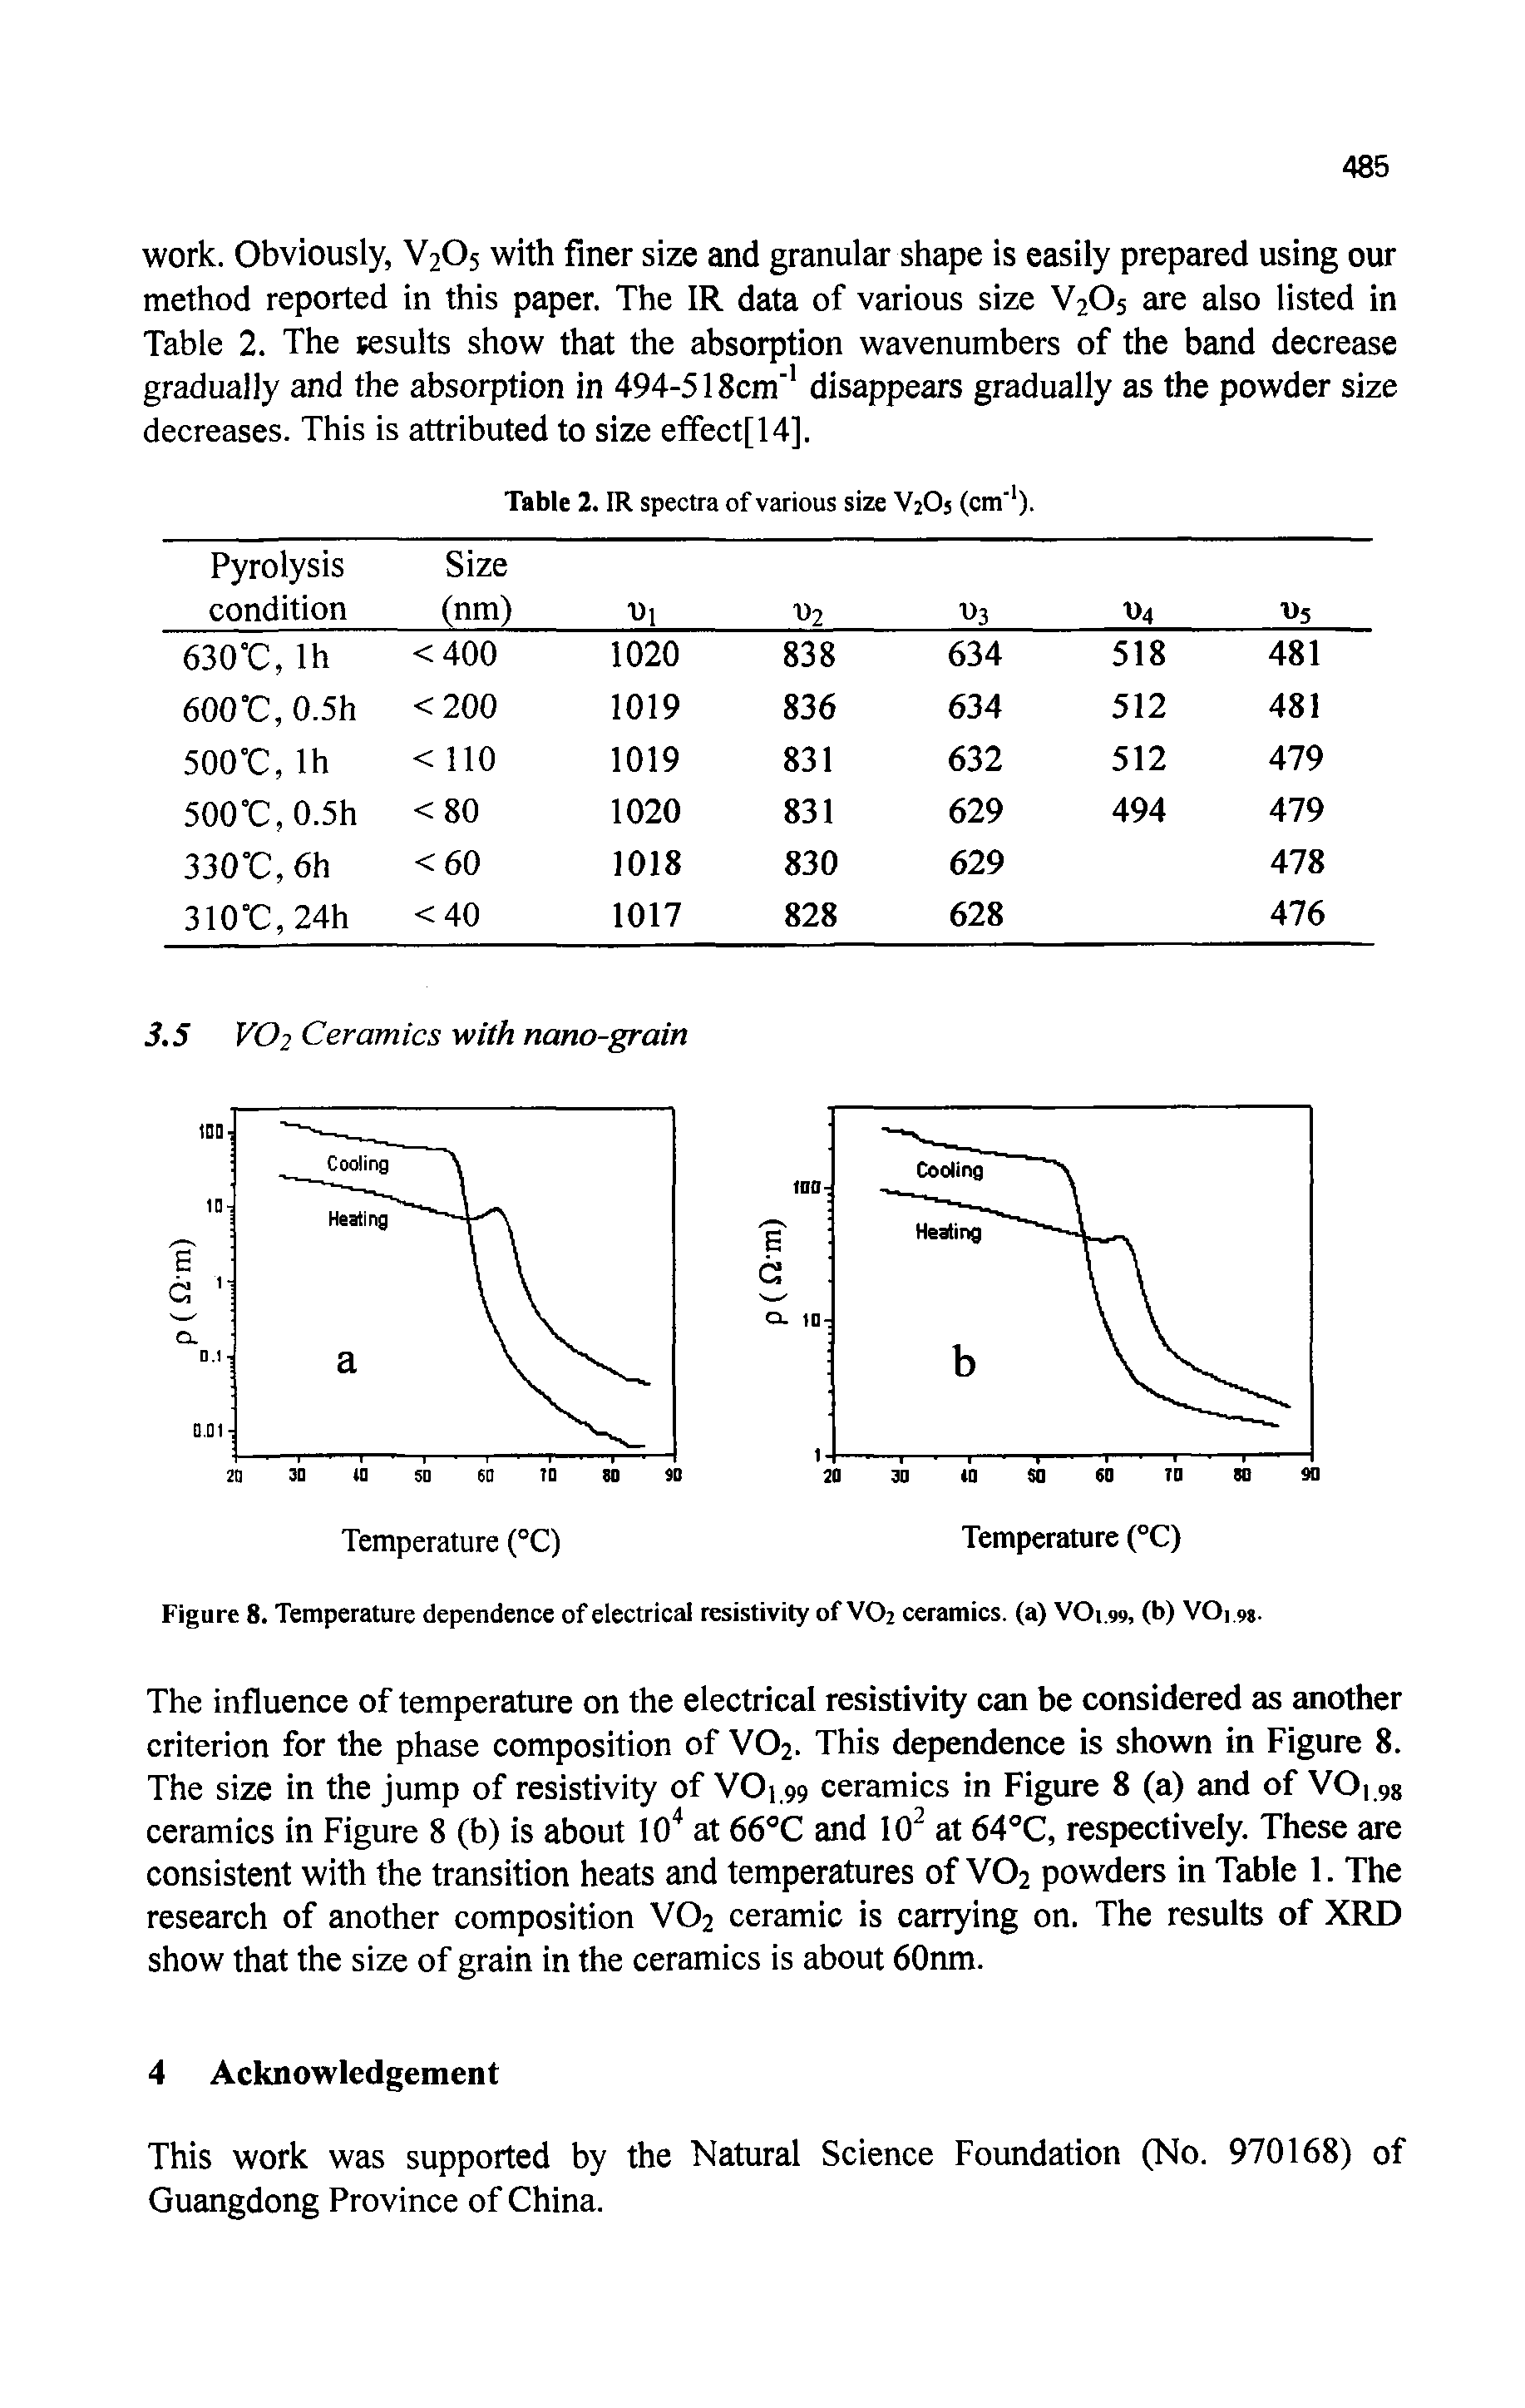 Figure 8. Temperature dependence of electrical resistivity of VO2 ceramics, (a) VOi.99, (b) VOi 93.